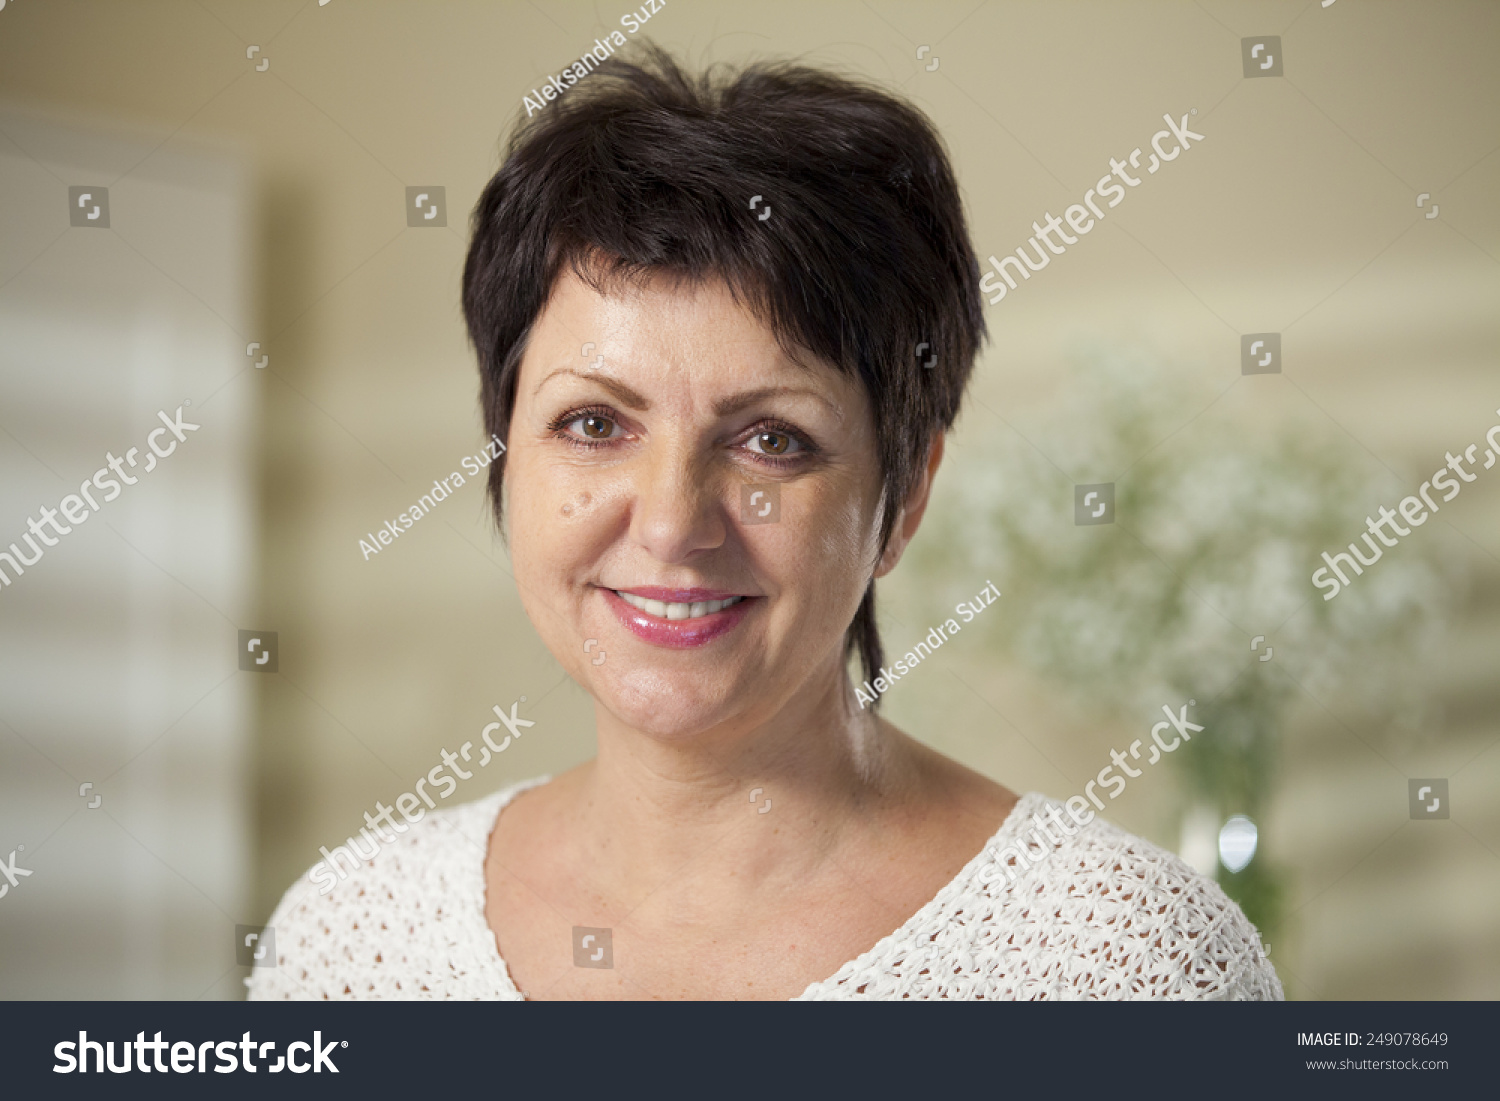 Mature Woman Smiling Stock Photo 249078649 : Shutterstock